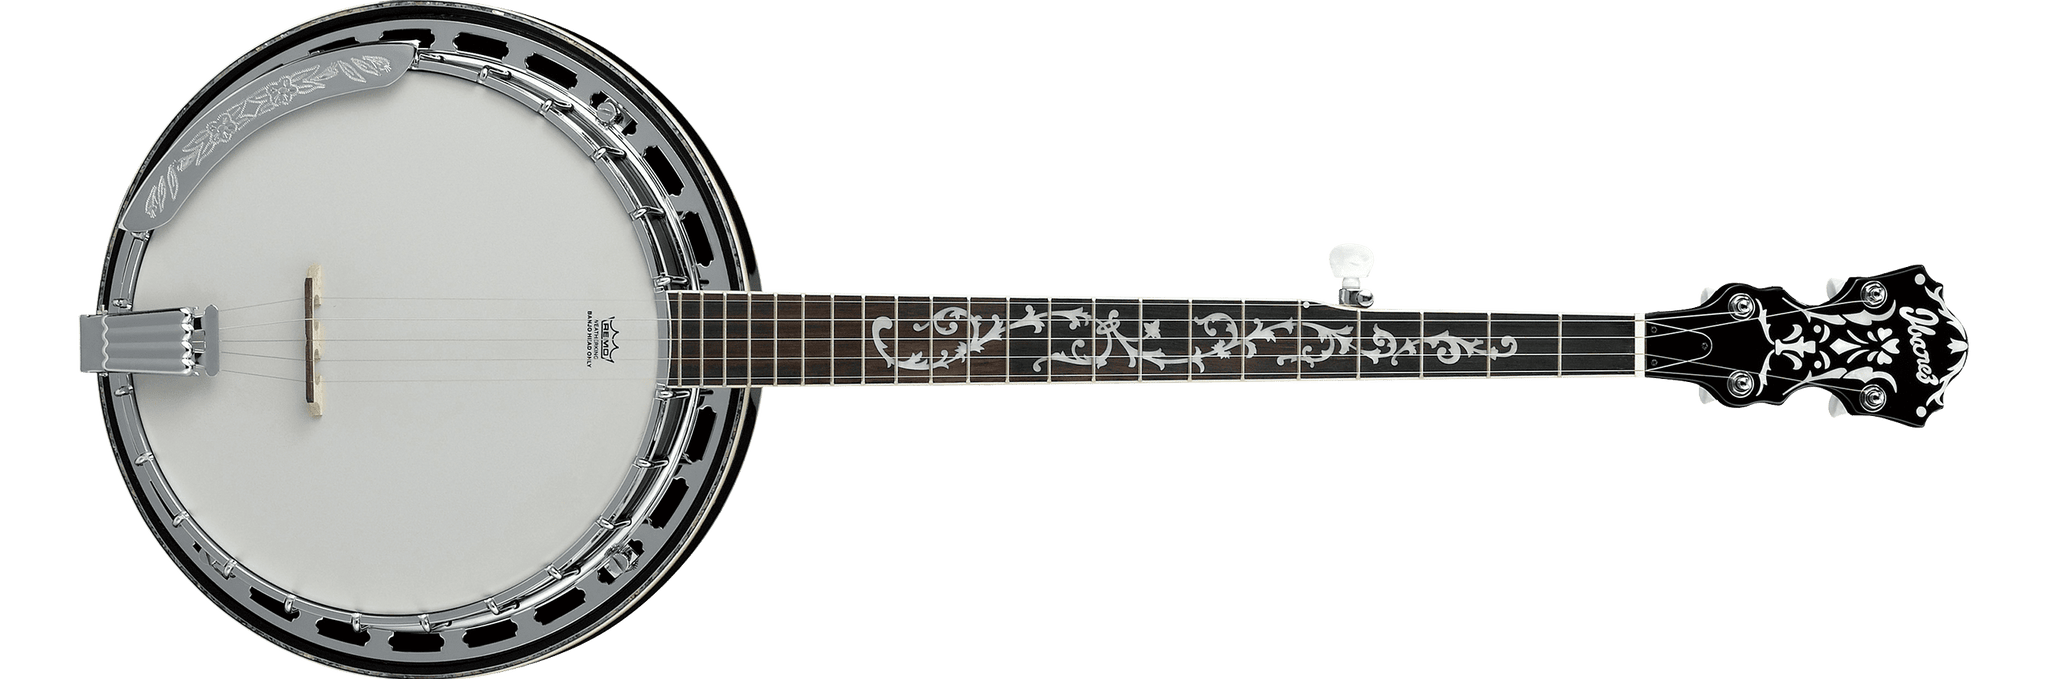 Ibanez B300 5 String Banjo with Rosewood Resonator